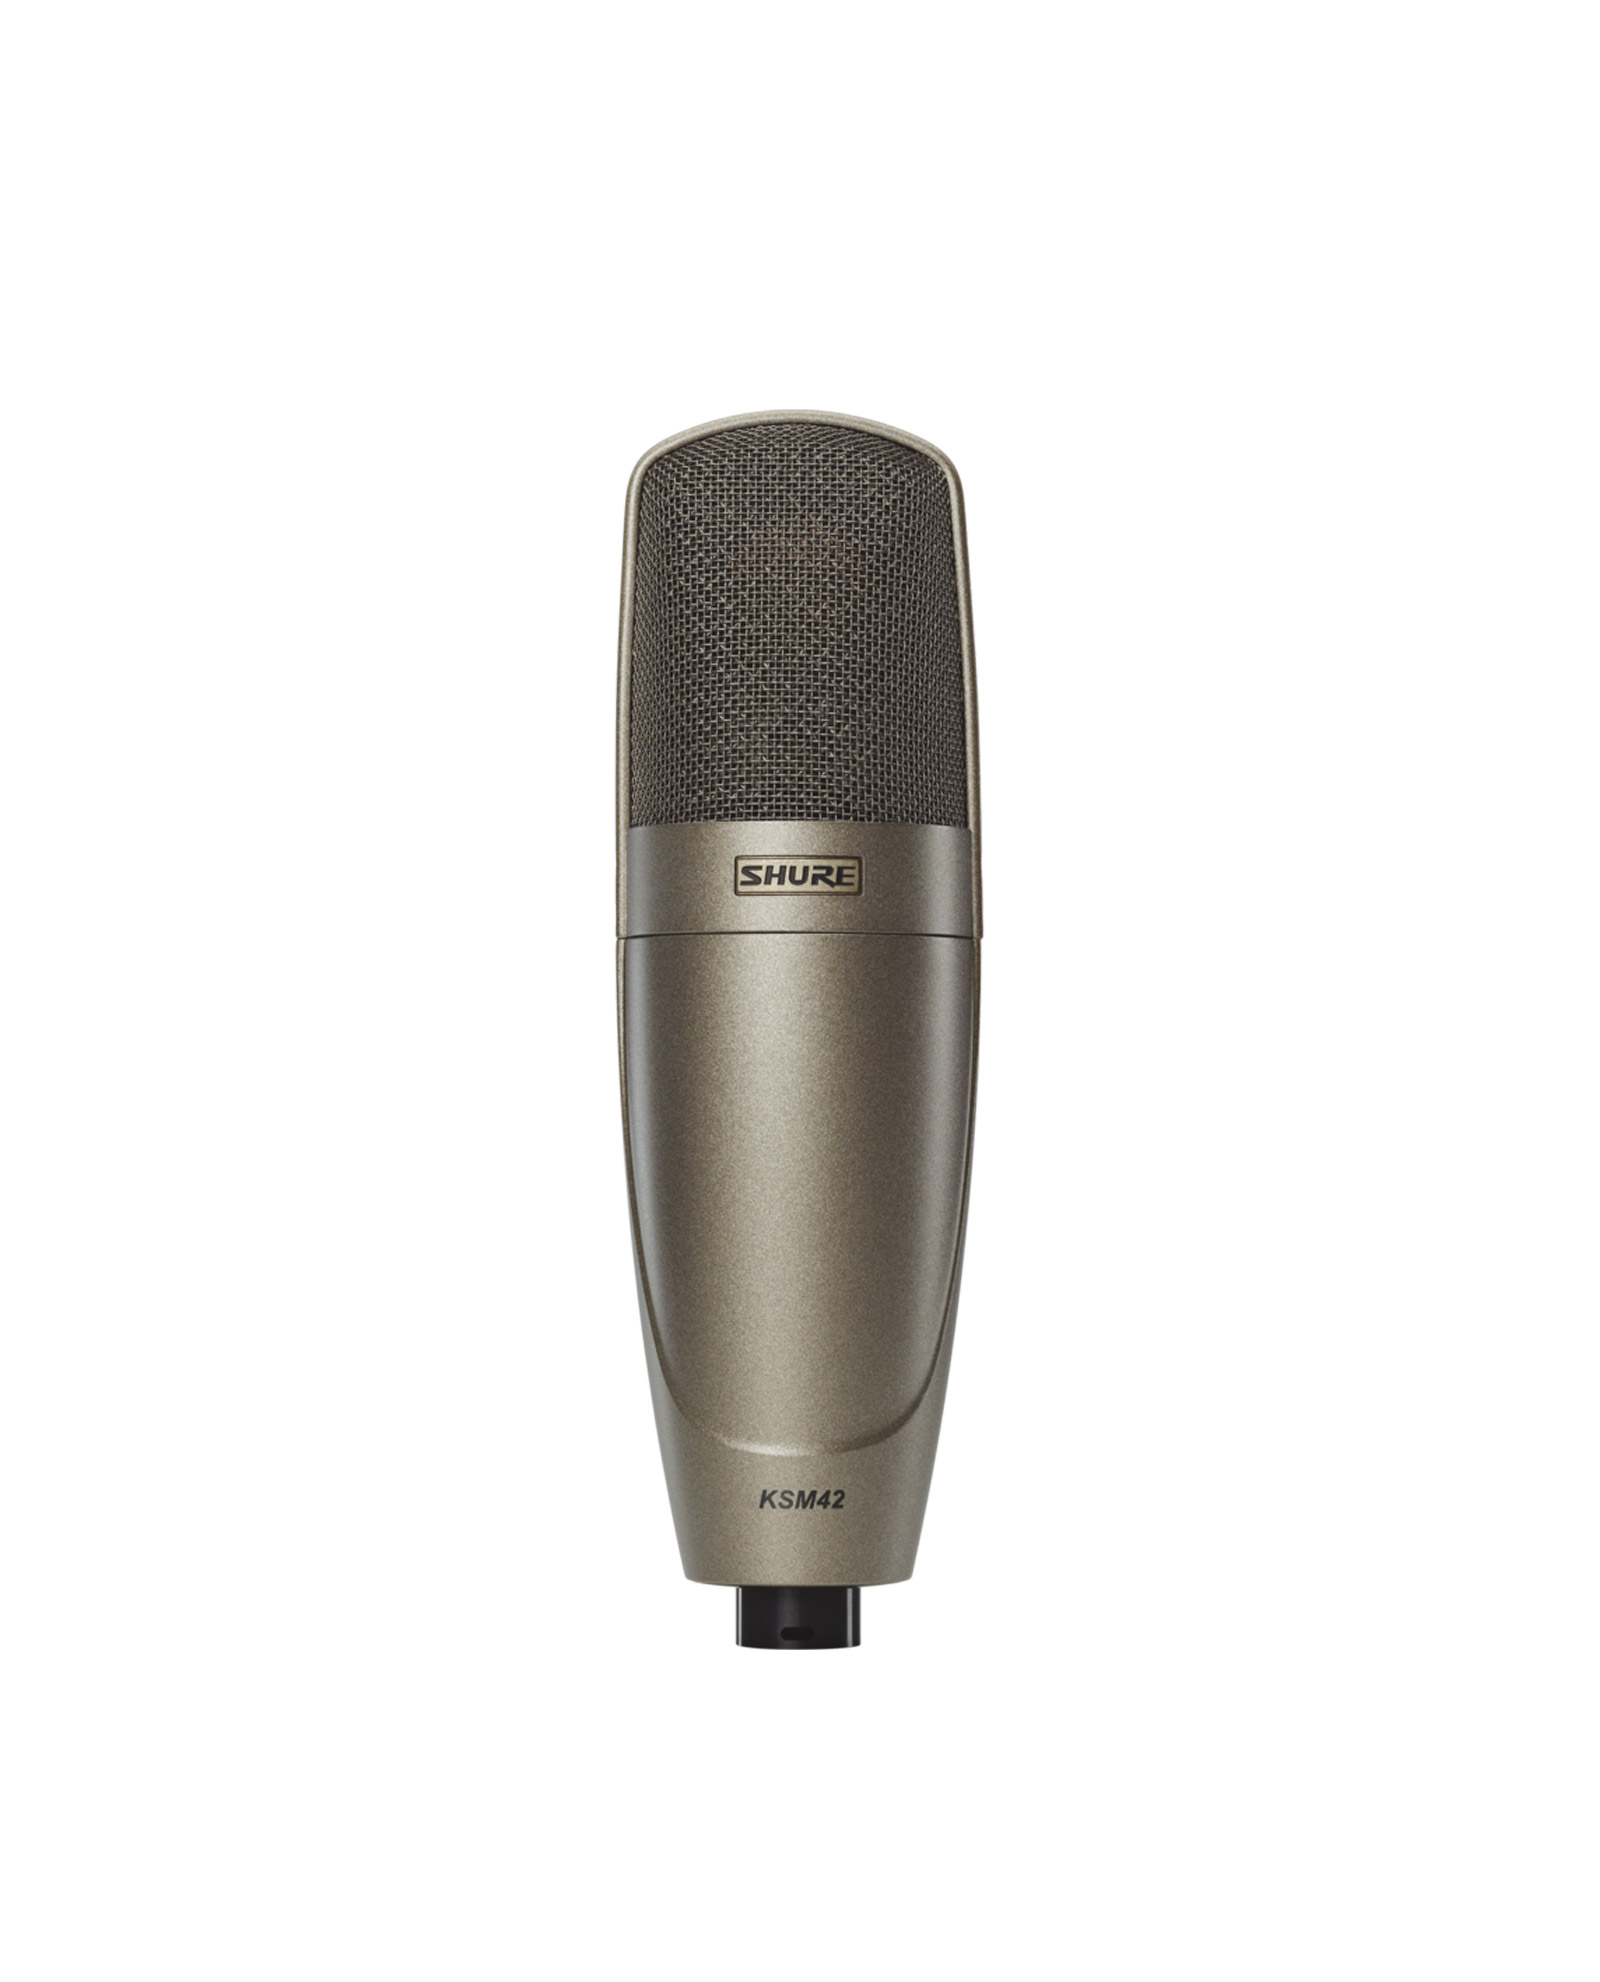 Shure Ksm42 Large Dual Diaphragm Microphone 1